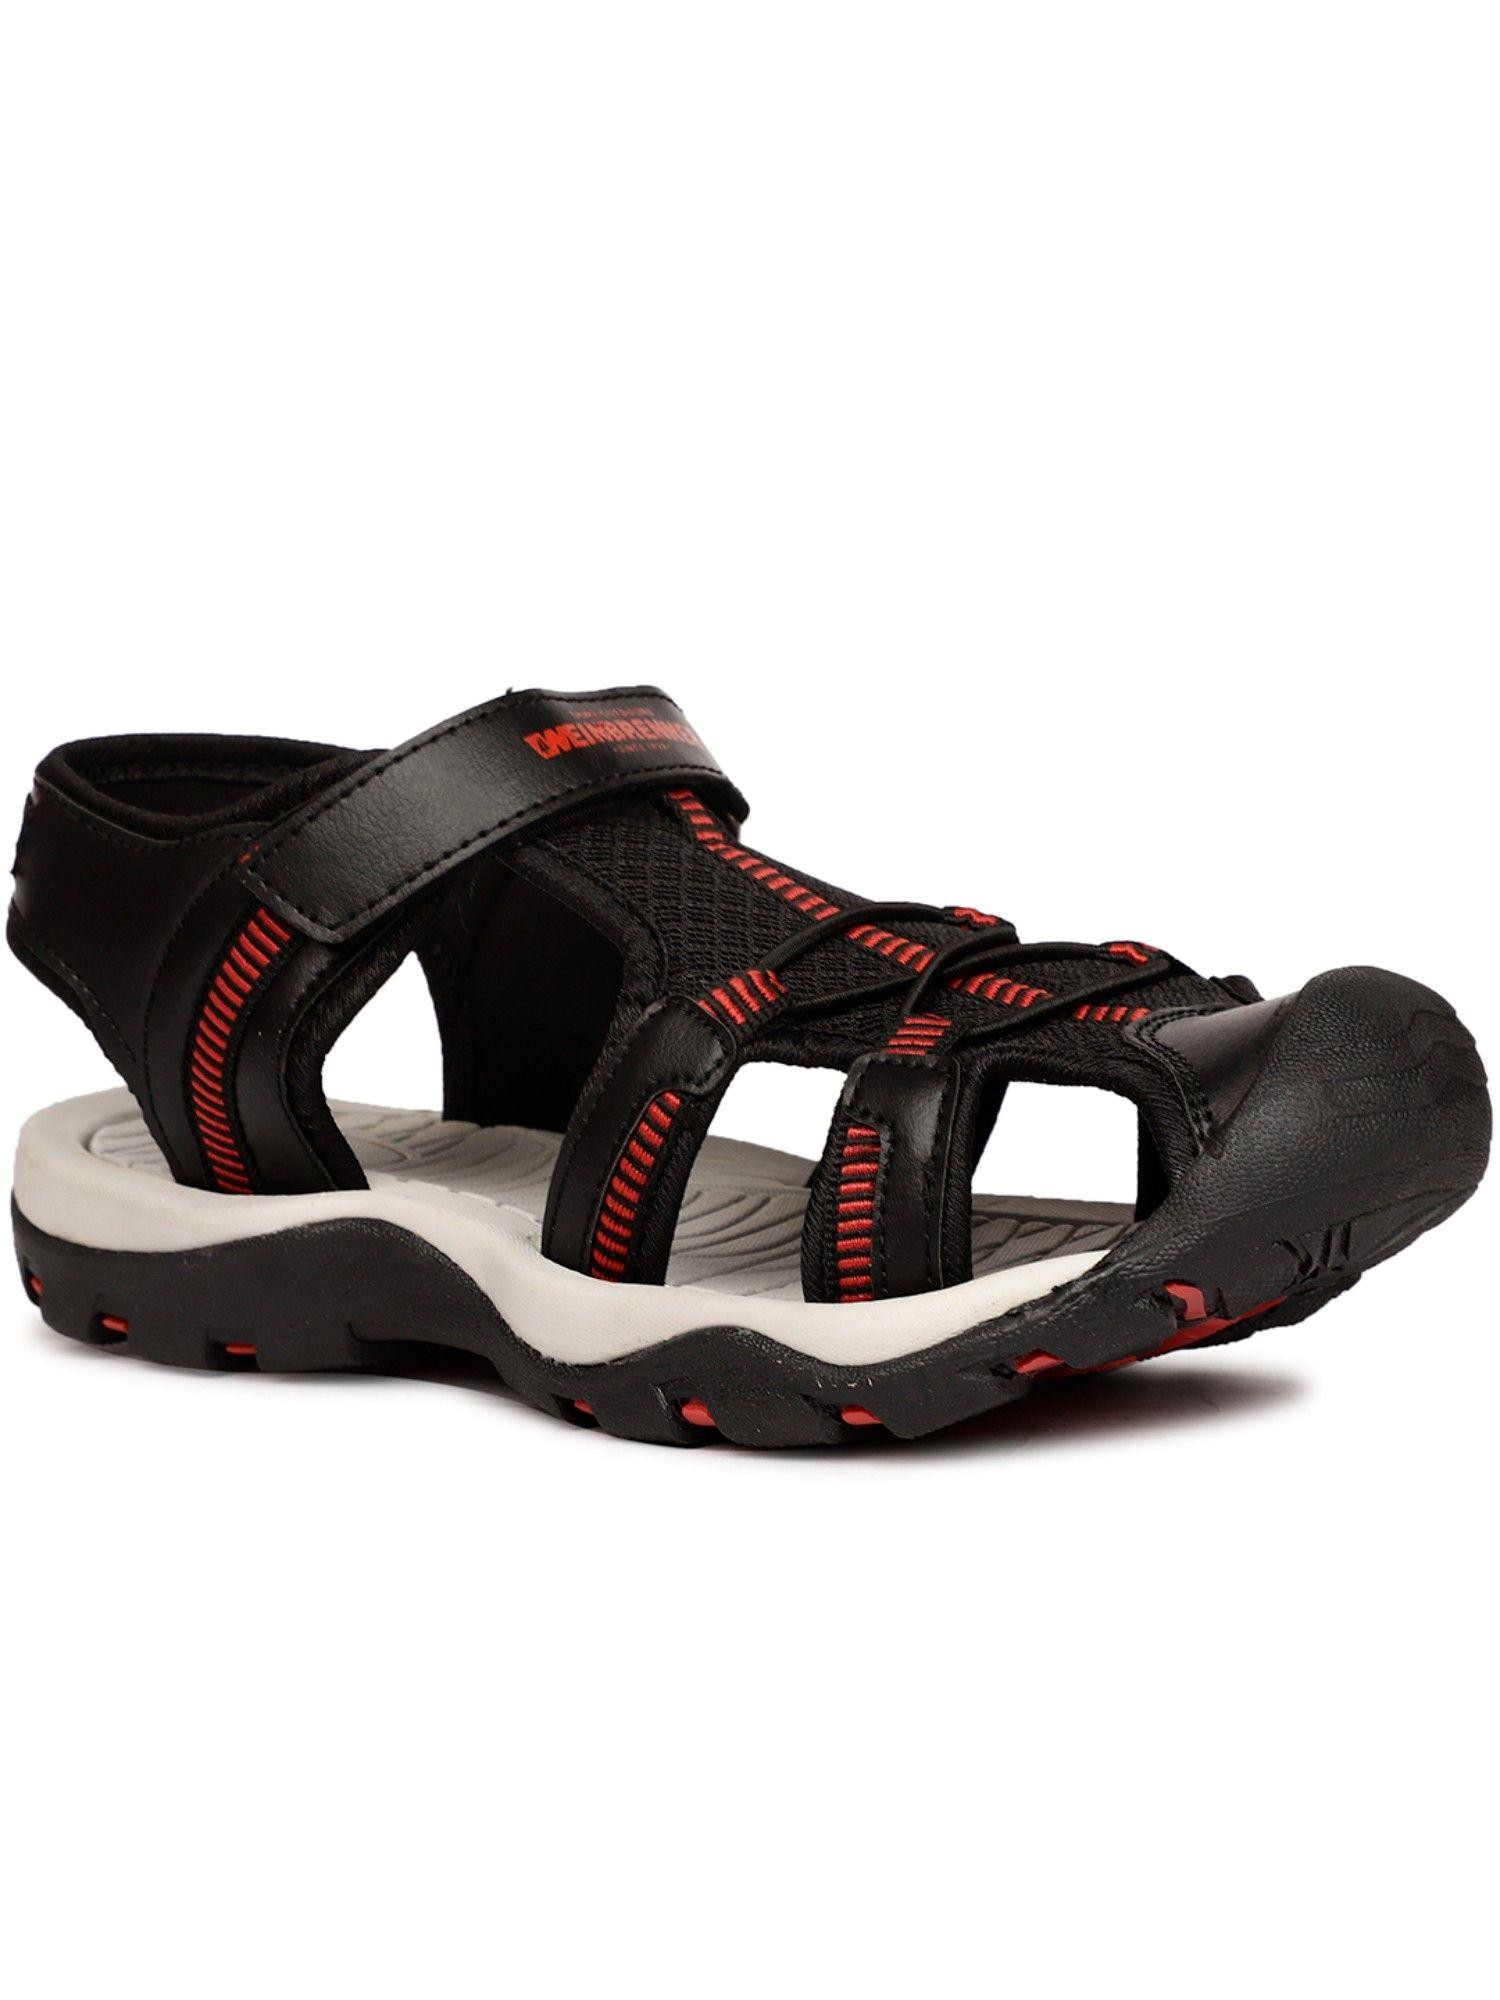 unisex velcro sandals